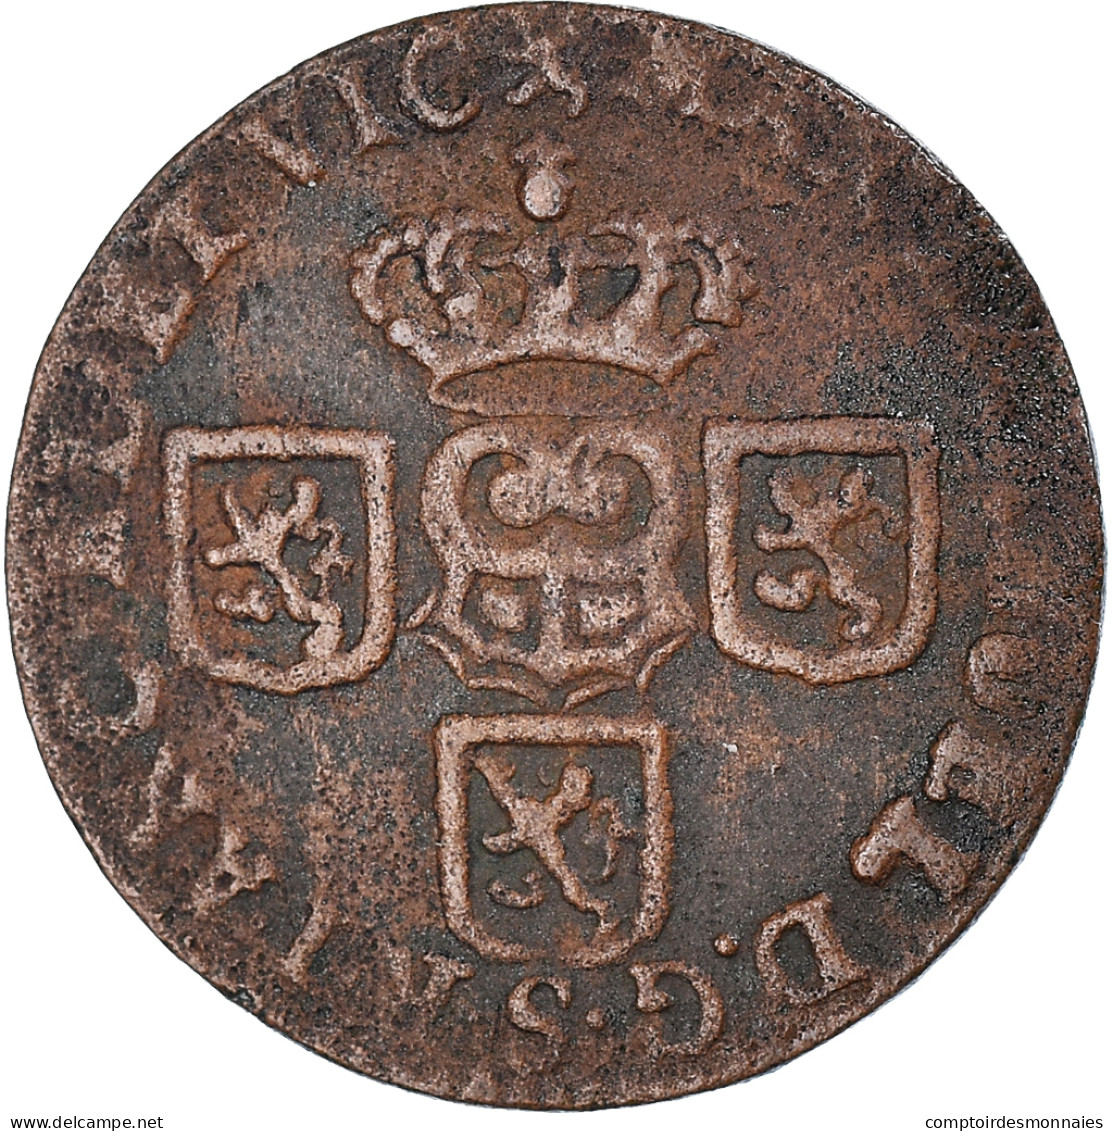 Monnaie, Pays-Bas Espagnols, NAMUR, Maximilian Emmanuel Of Bavaria, Liard, 1712 - Spanish Netherlands